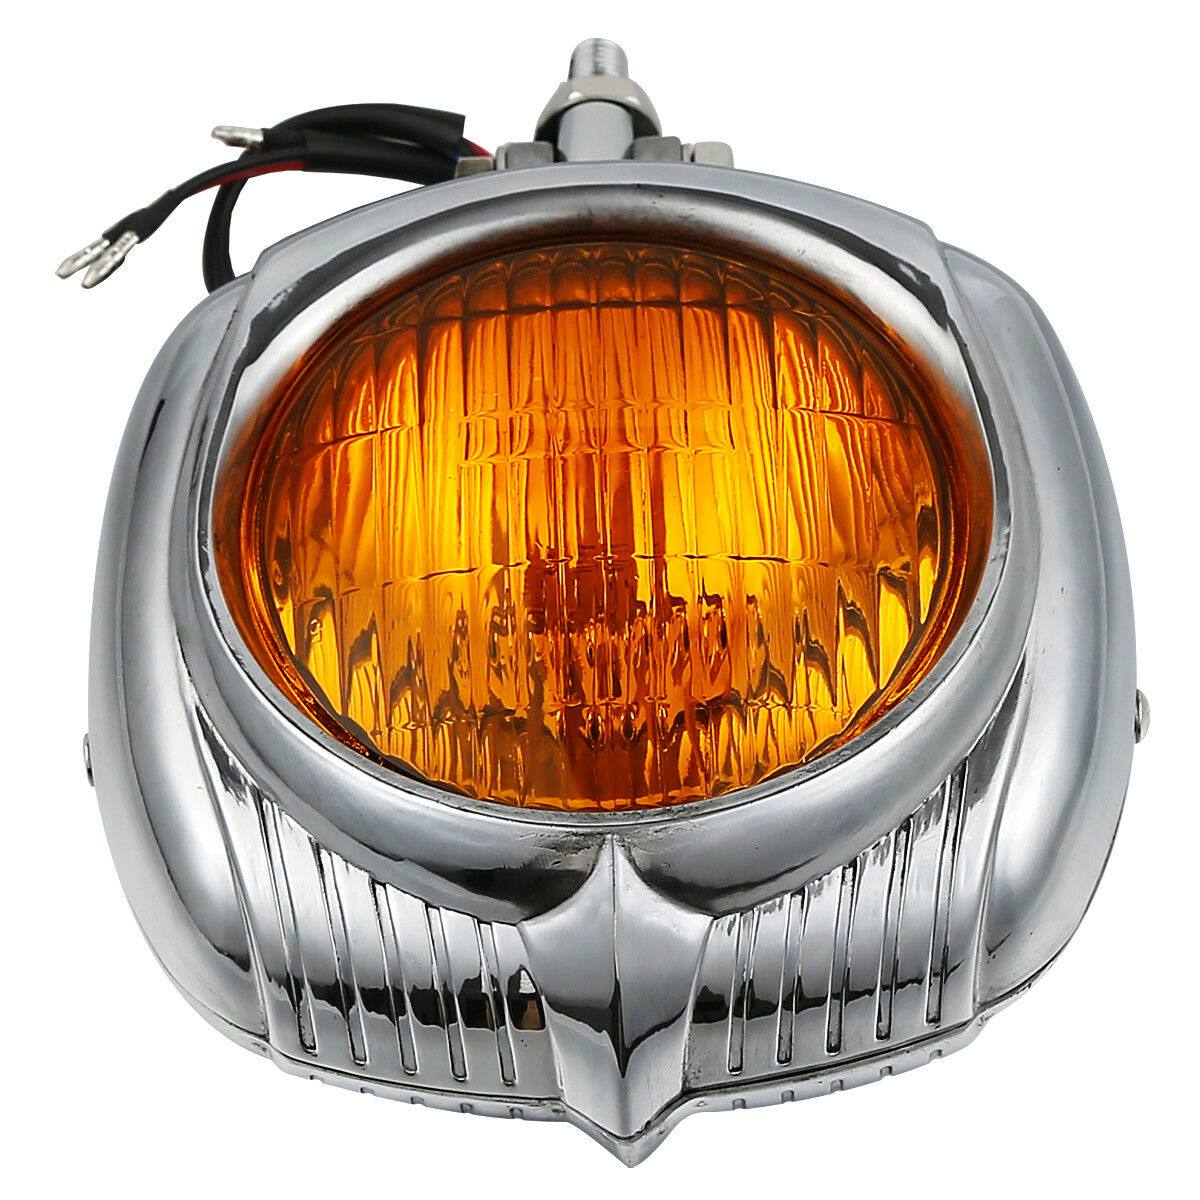 Retro Electroline Vintage Headlight Fit For Harley Dyna Sportster Chopper Bobber - Moto Life Products